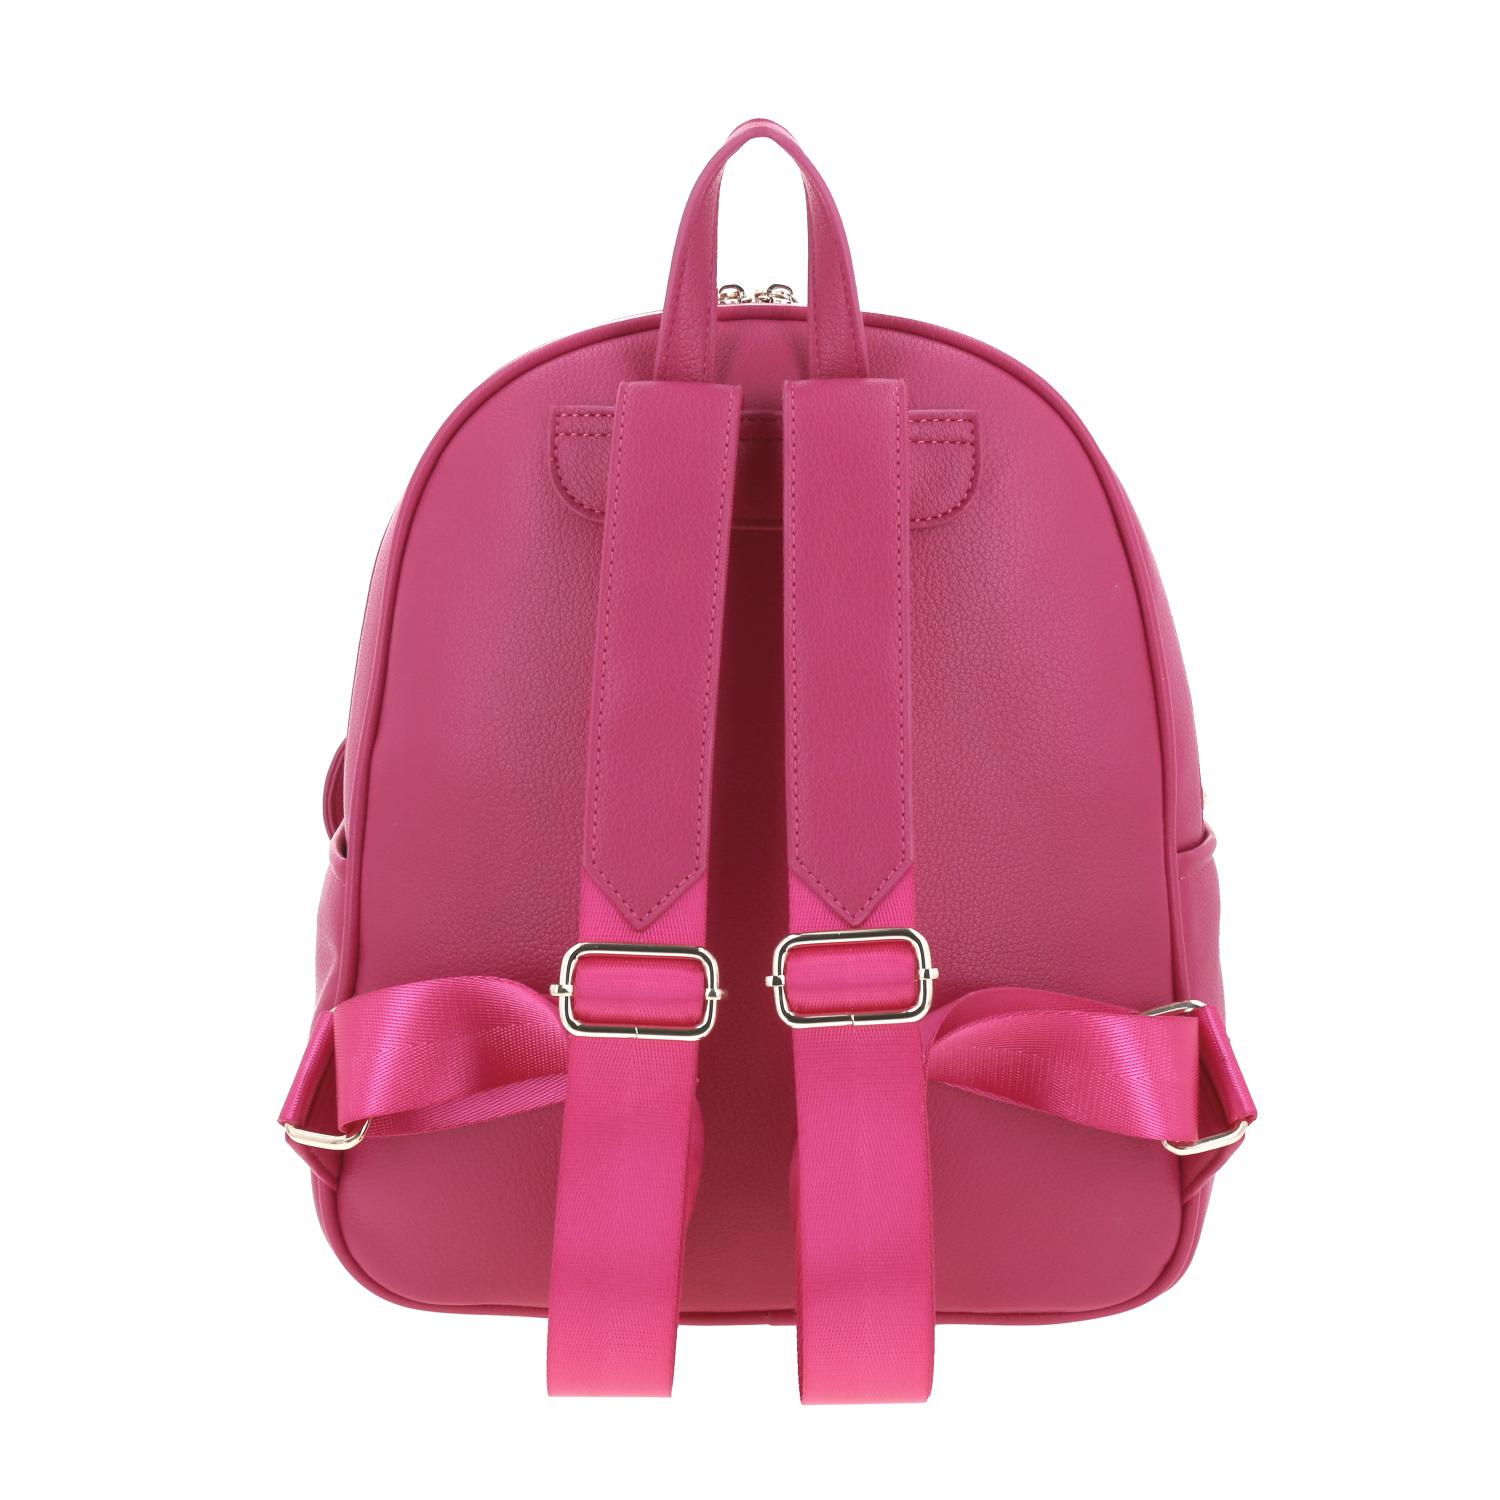 Backpack Barbie by Gorett Rosa Mayle